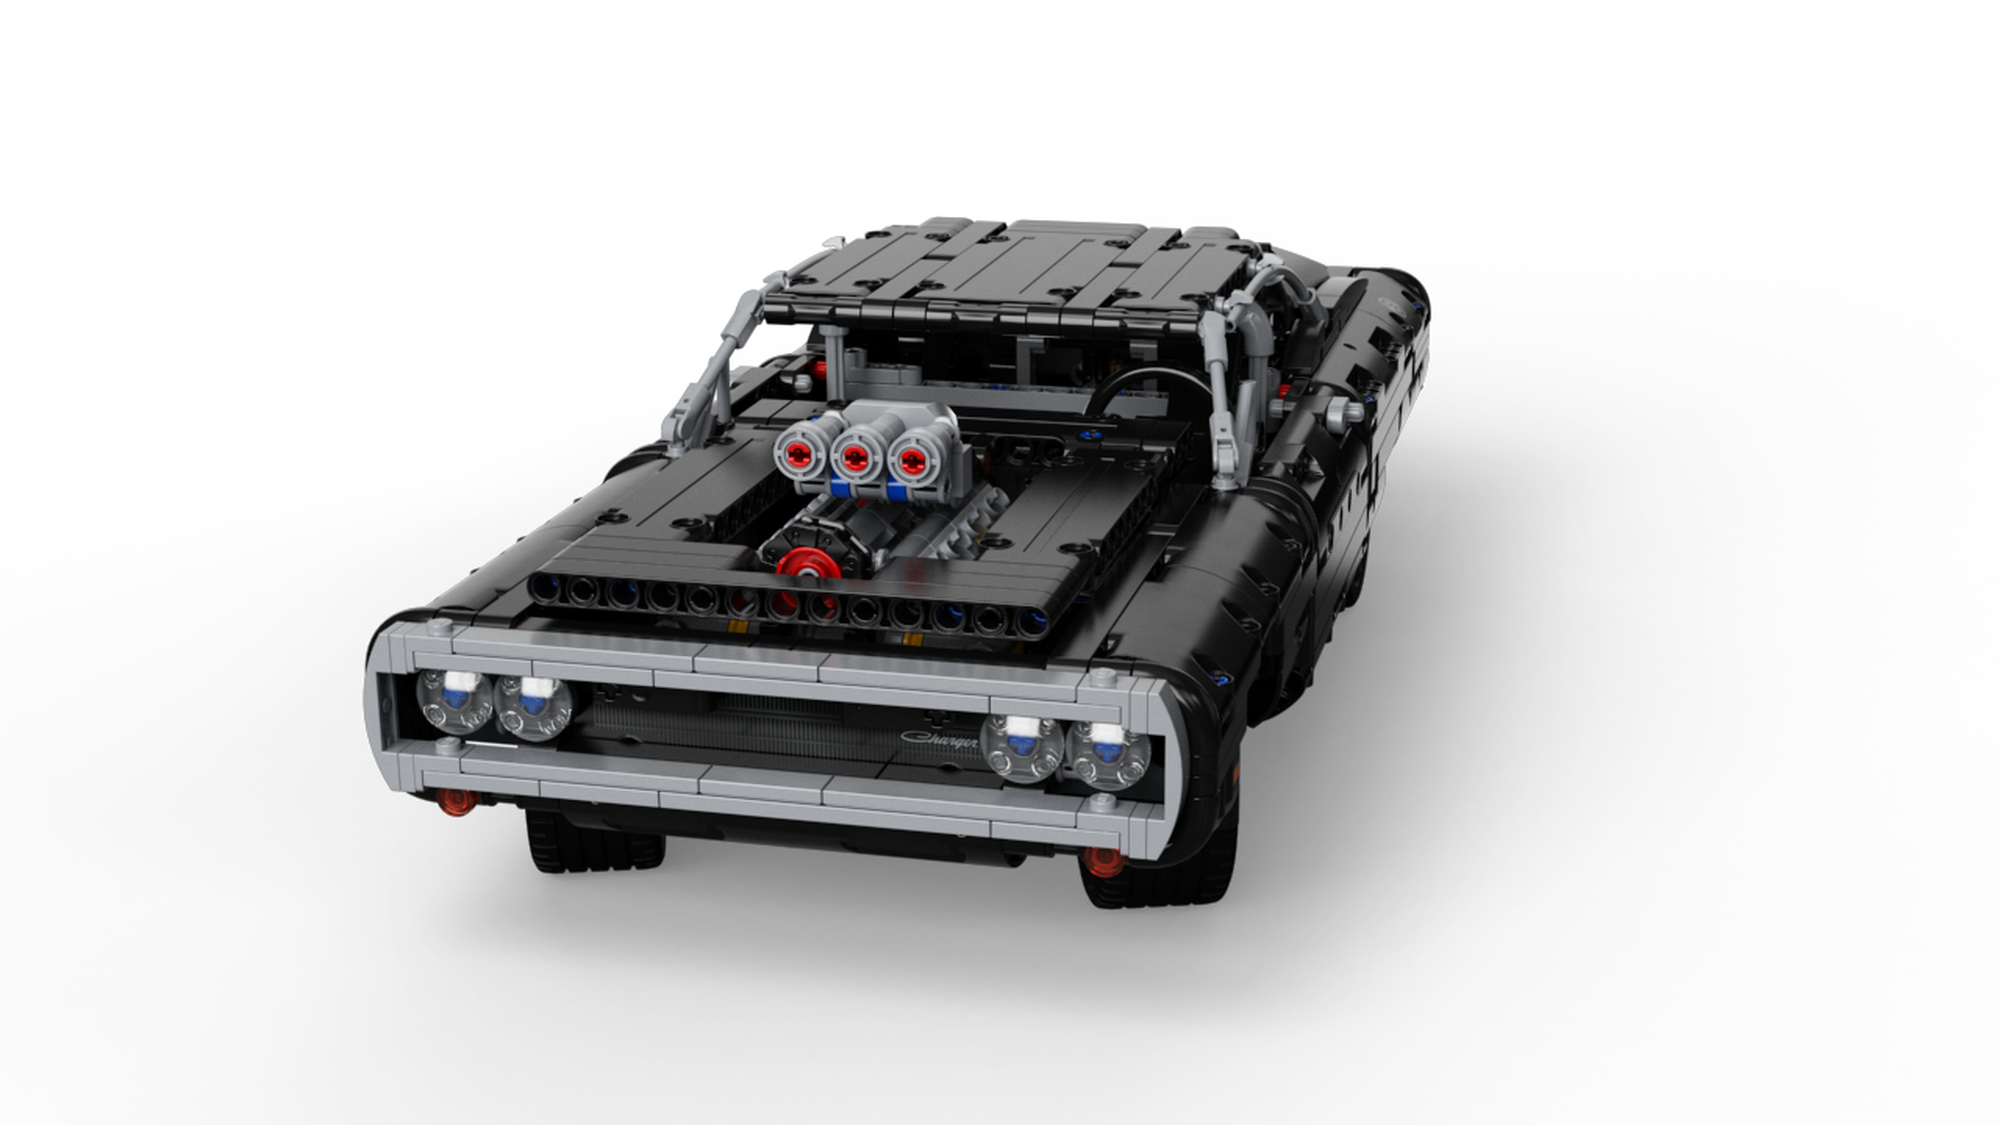 LEGO 42111: Technic: Dom's Dodge Charger – Brick Shack